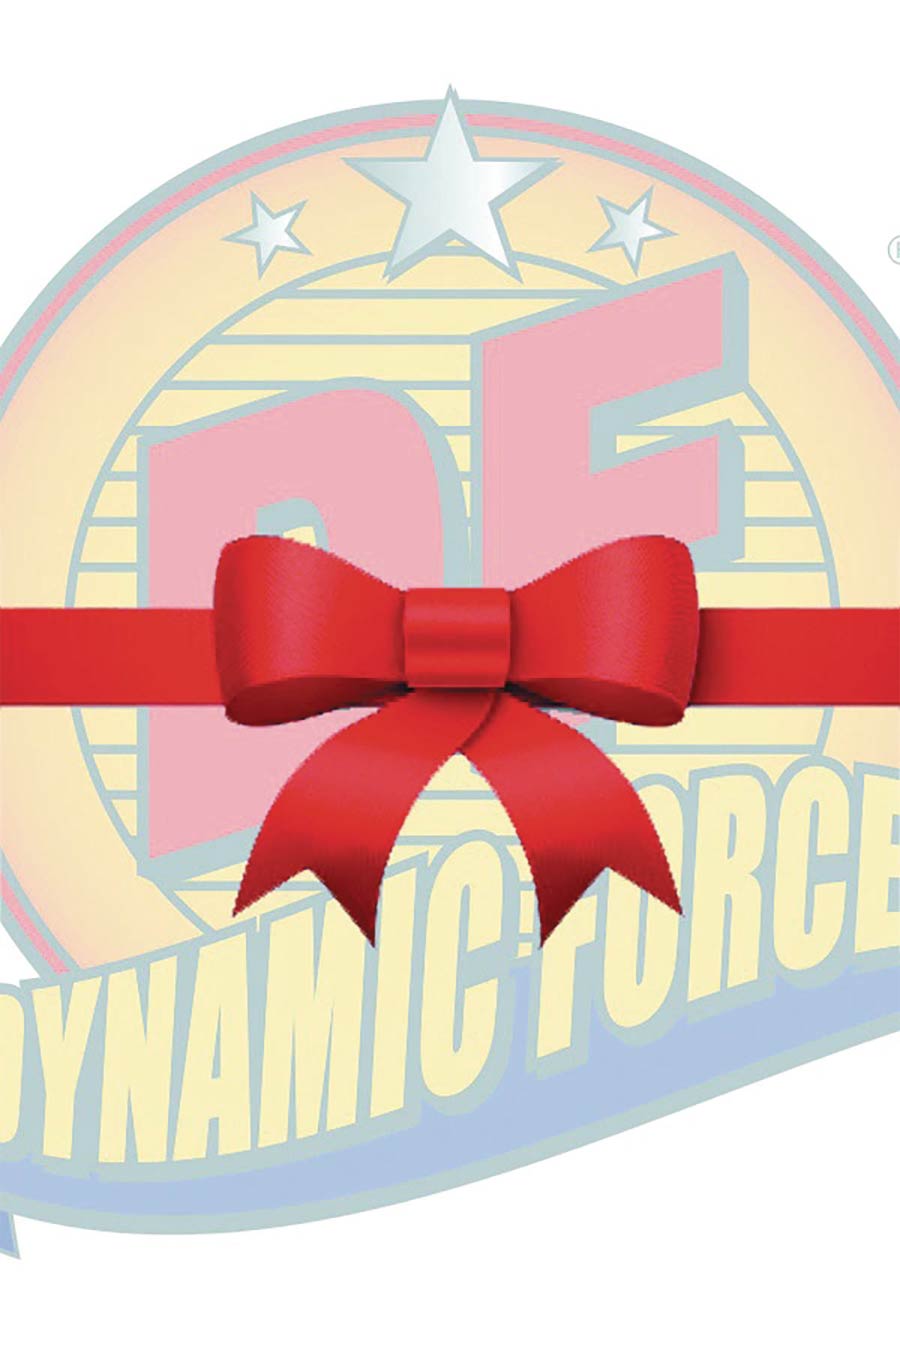 Dynamic Forces April Showers 2020 Celebration Pack